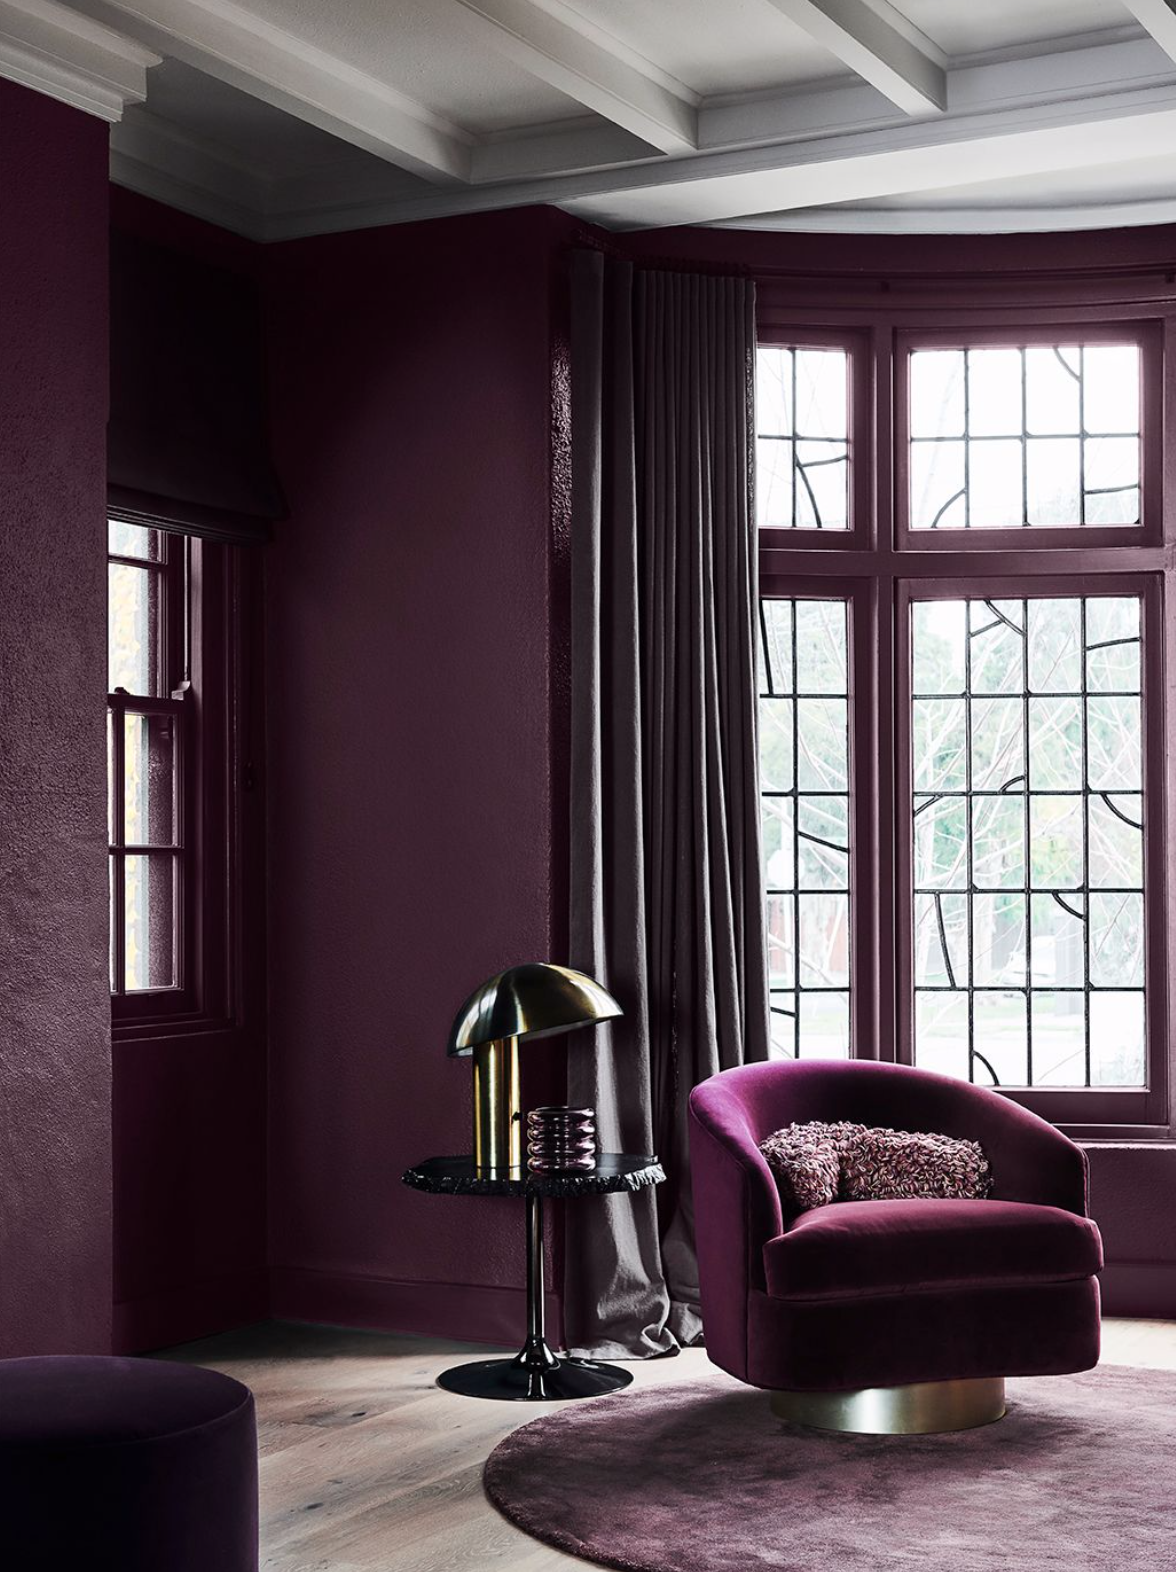 Espacio interior color púrpura